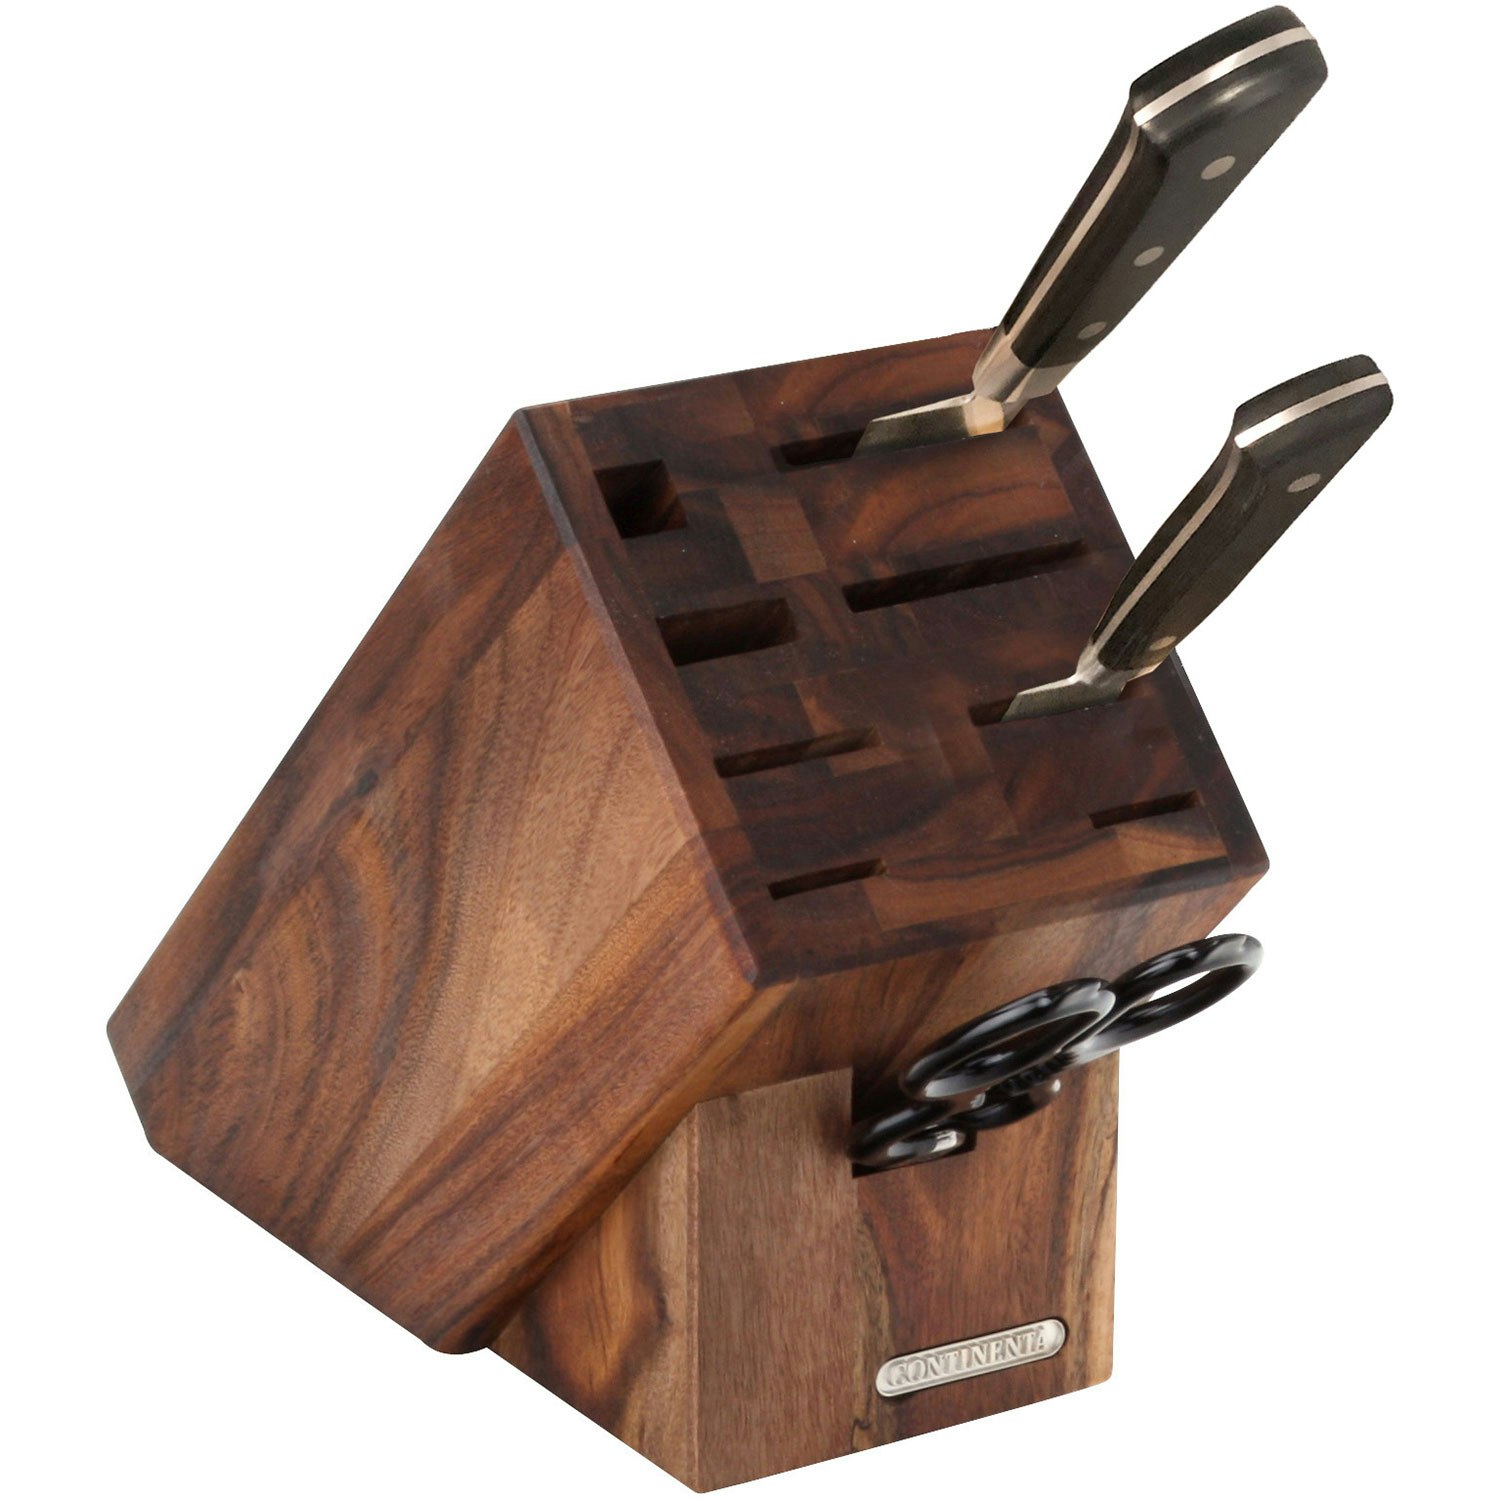 https://royaldesign.com/image/2/continenta-knife-block-in-acacia-for-5-knives-brow-scissor-0